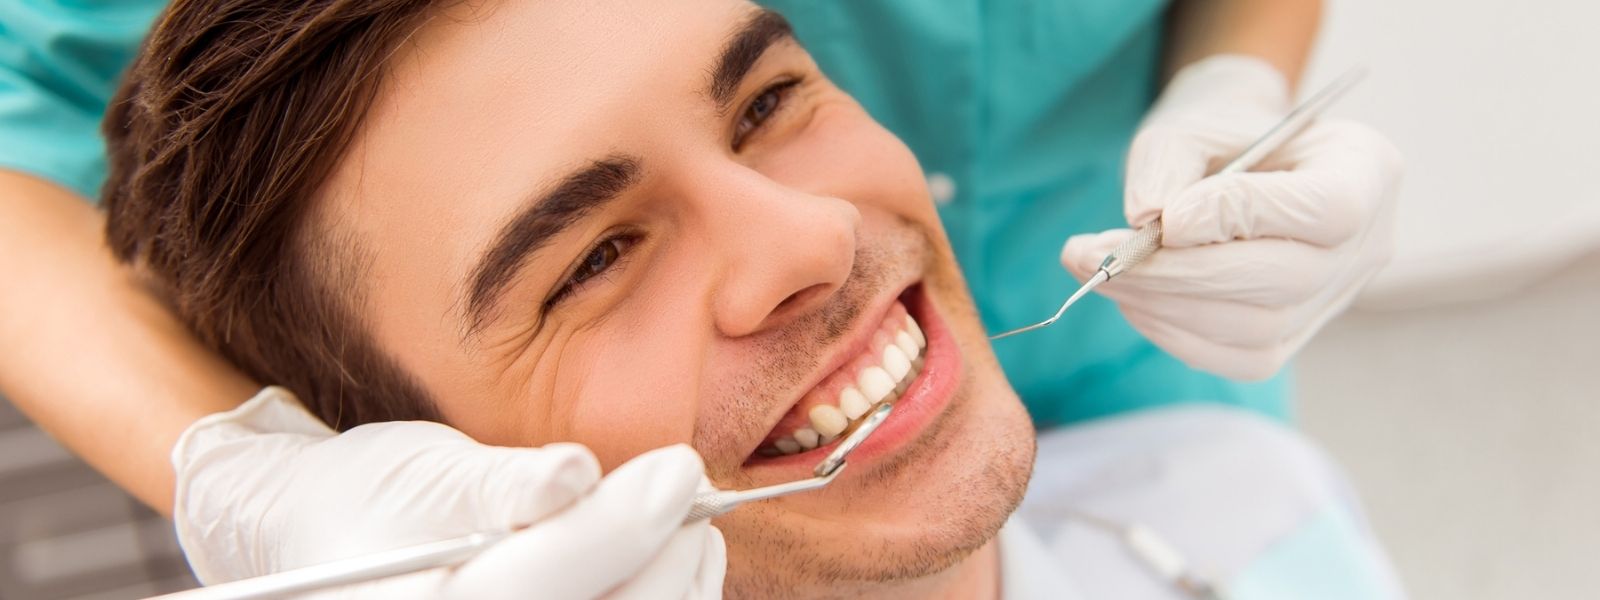 Dentist checking the Dental implants